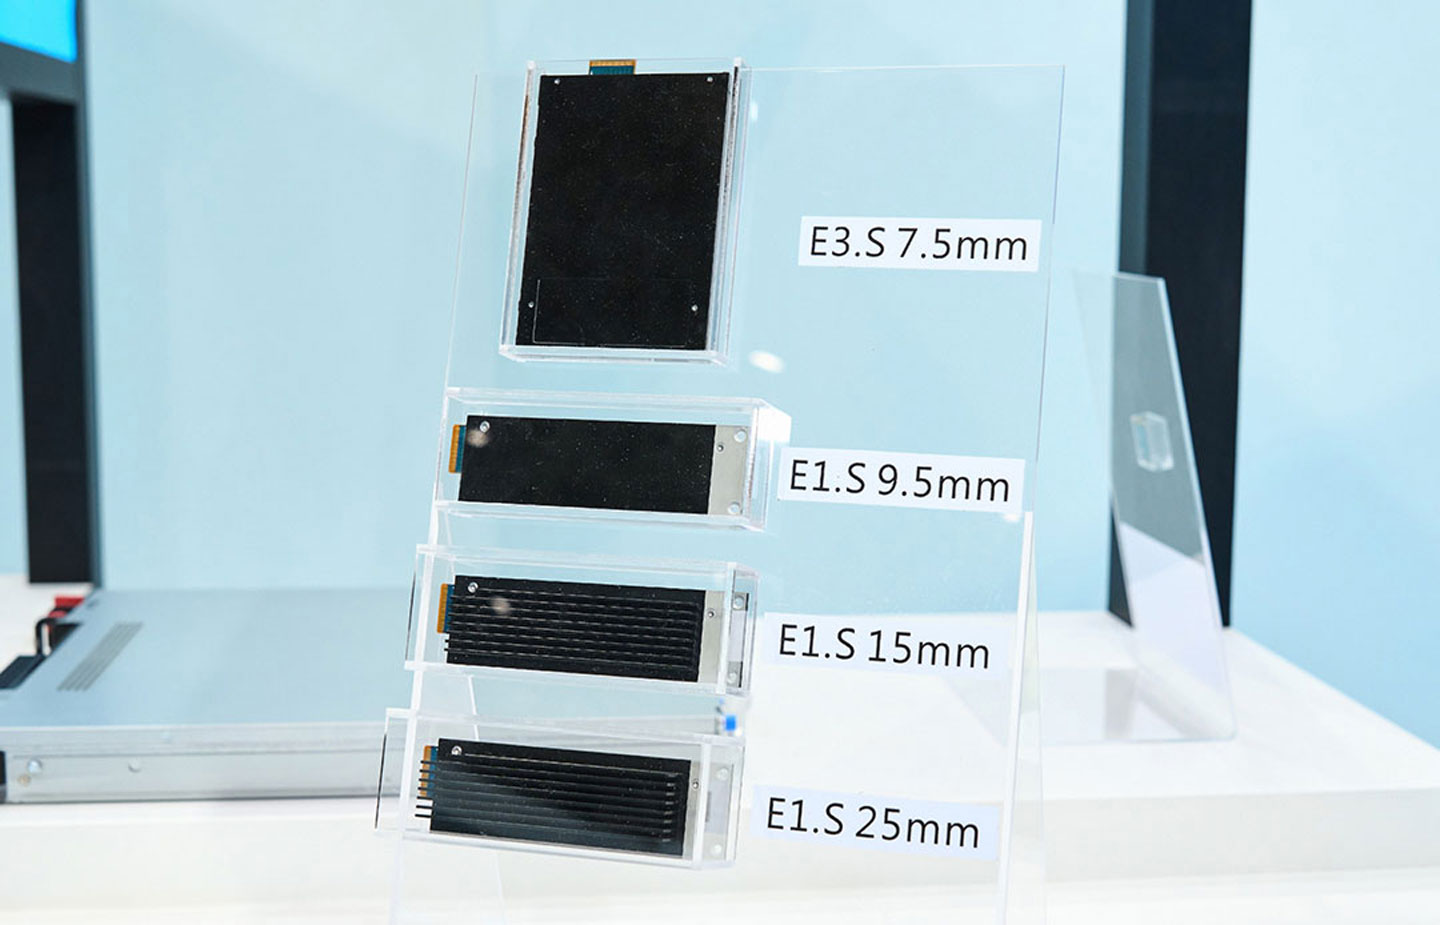 EDSFF 數據心 SSD 採用 KIOXIA 新式的 E1.S 與 E3.S 形式，現場也提供了不同尺寸的產品比較。